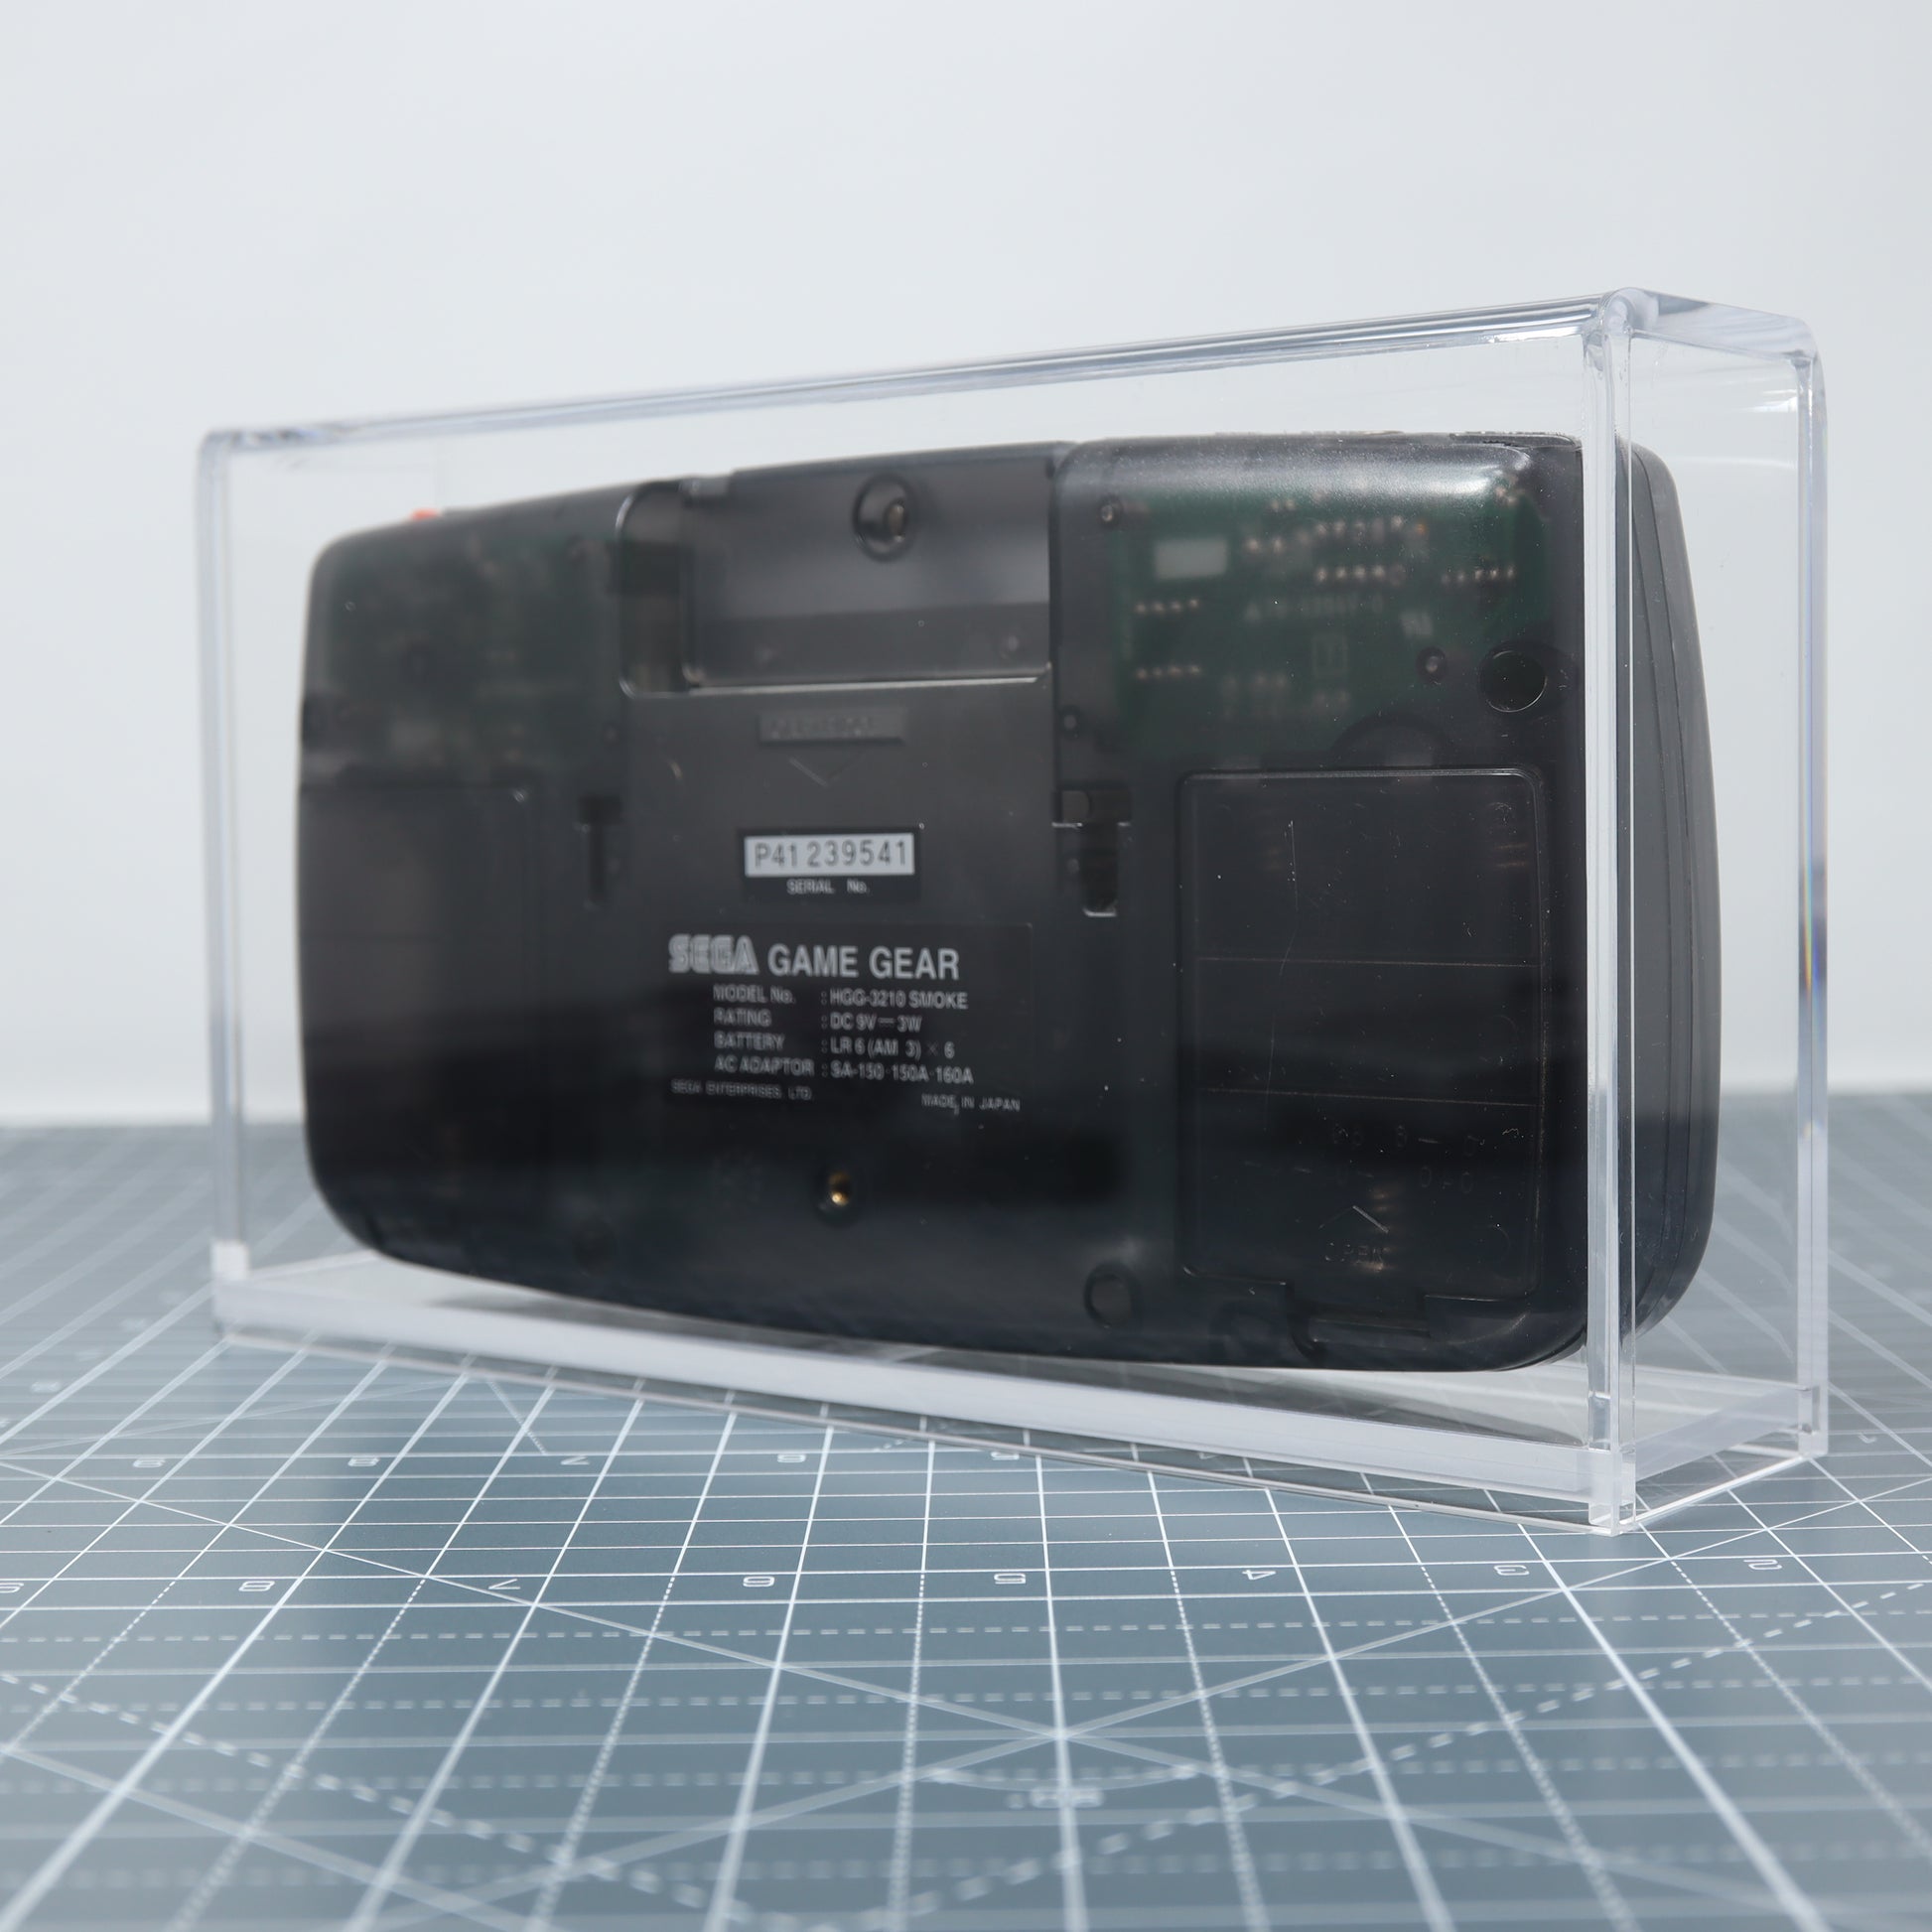 Sega Game Gear Smoke Black edition console on display in custom acrylic display capsule rear